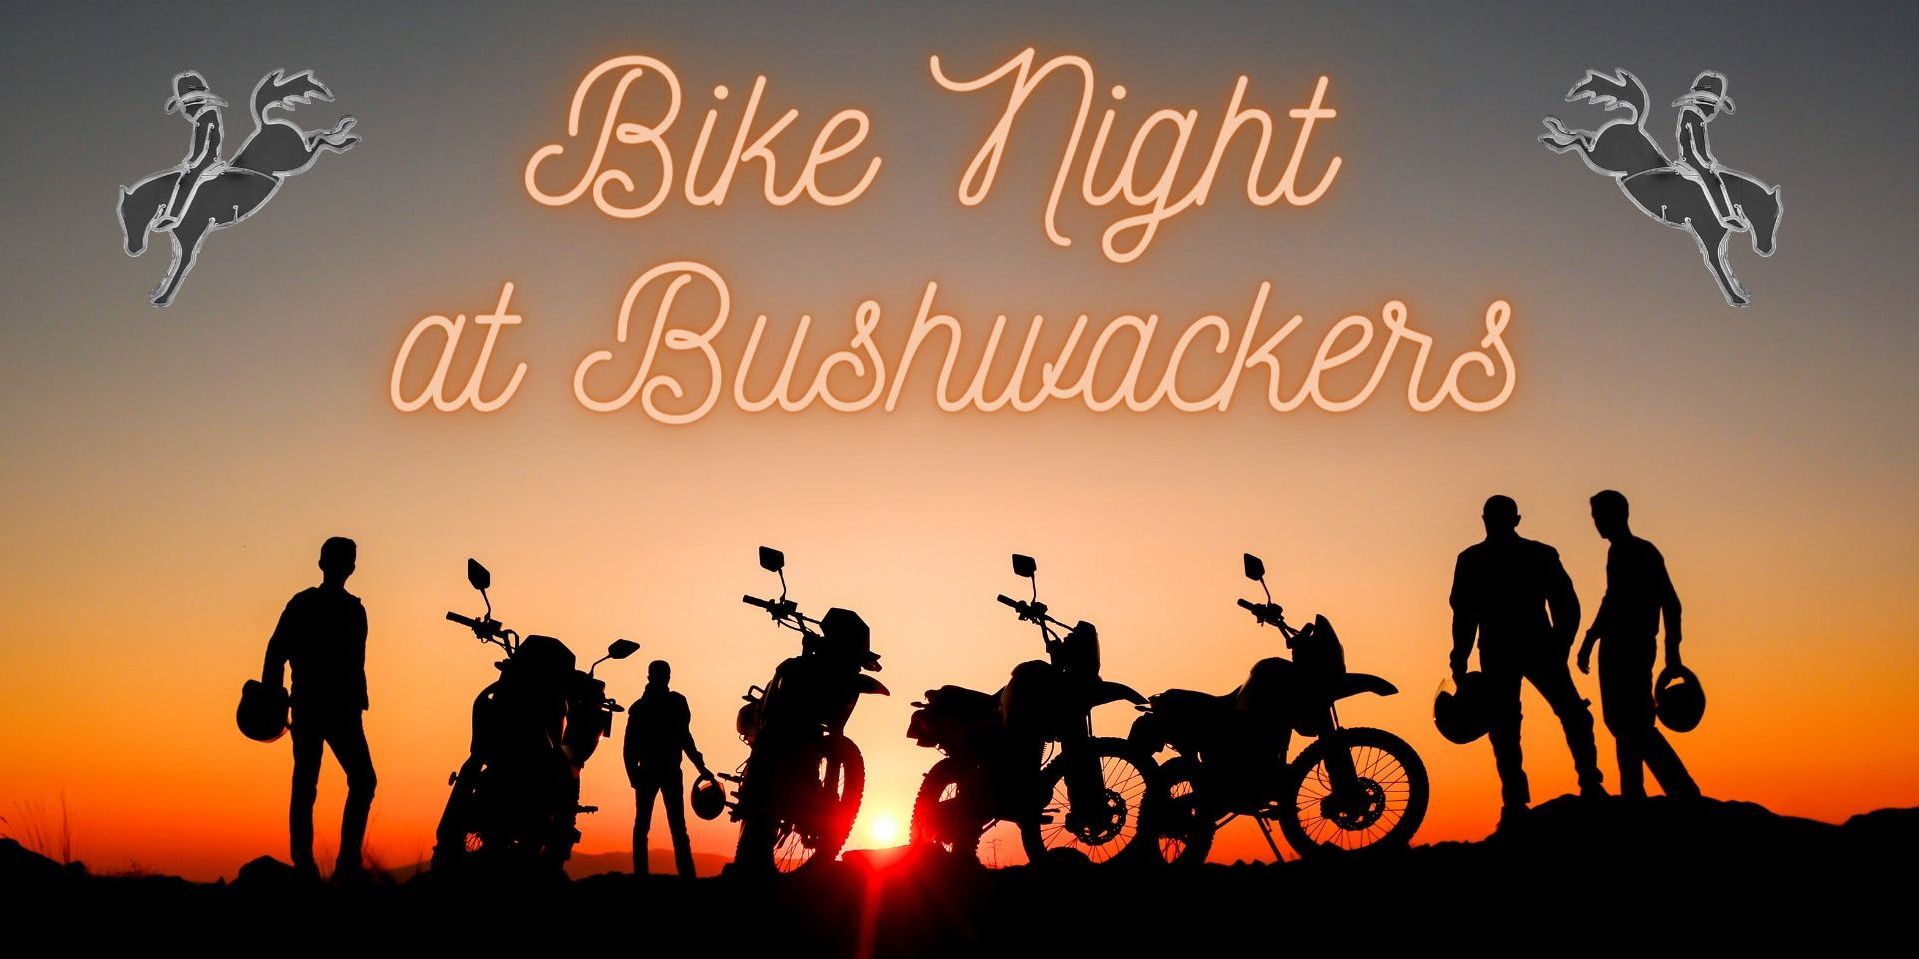 Bike Night at Bushwackers! promotional image